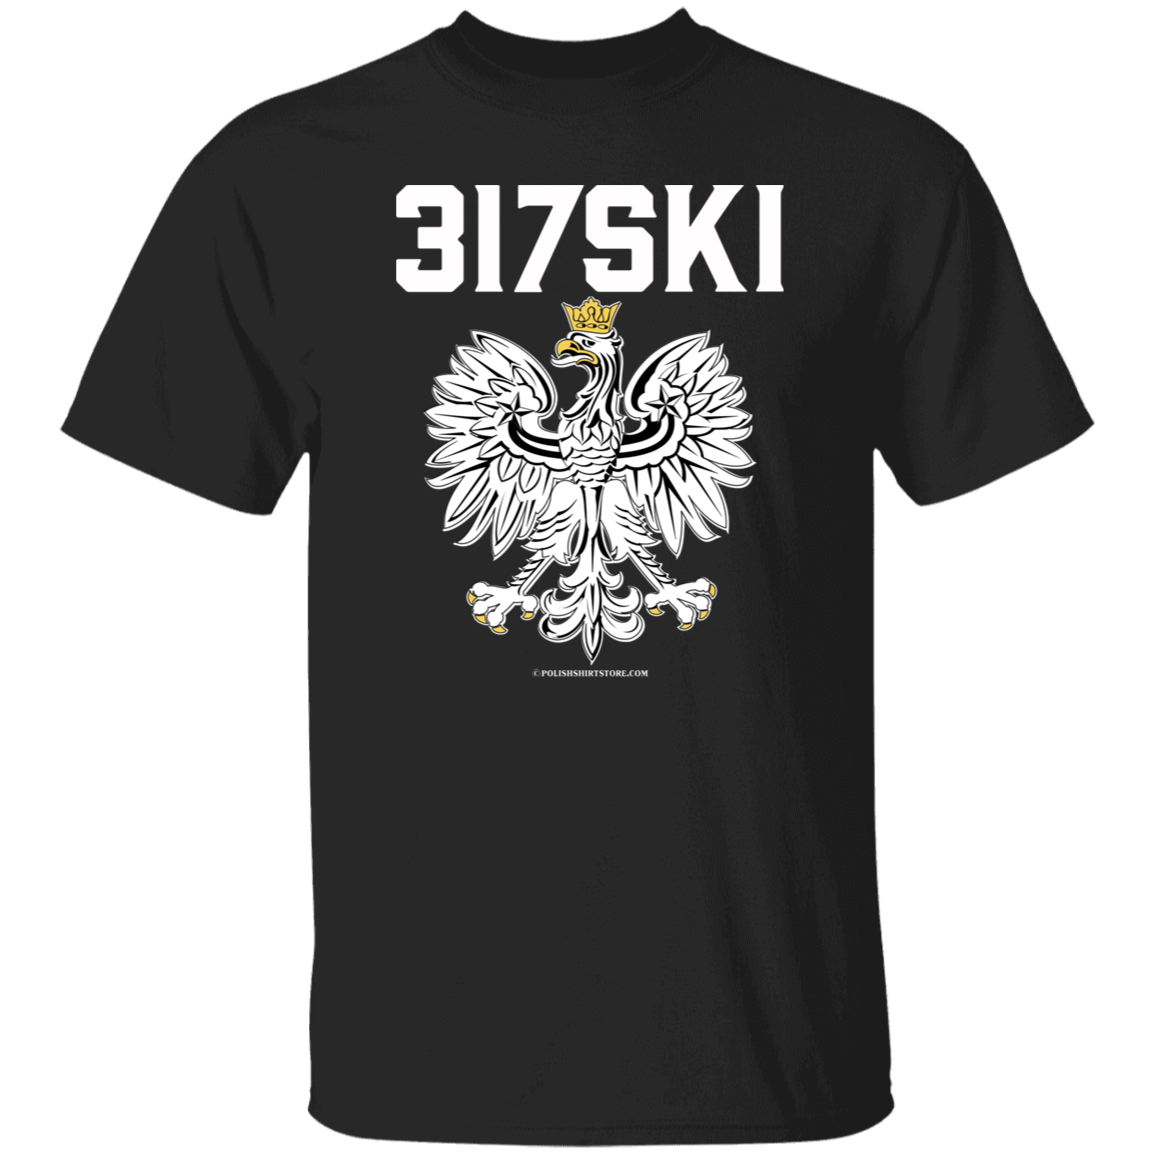 317SKI Apparel CustomCat G500 5.3 oz. T-Shirt Black S